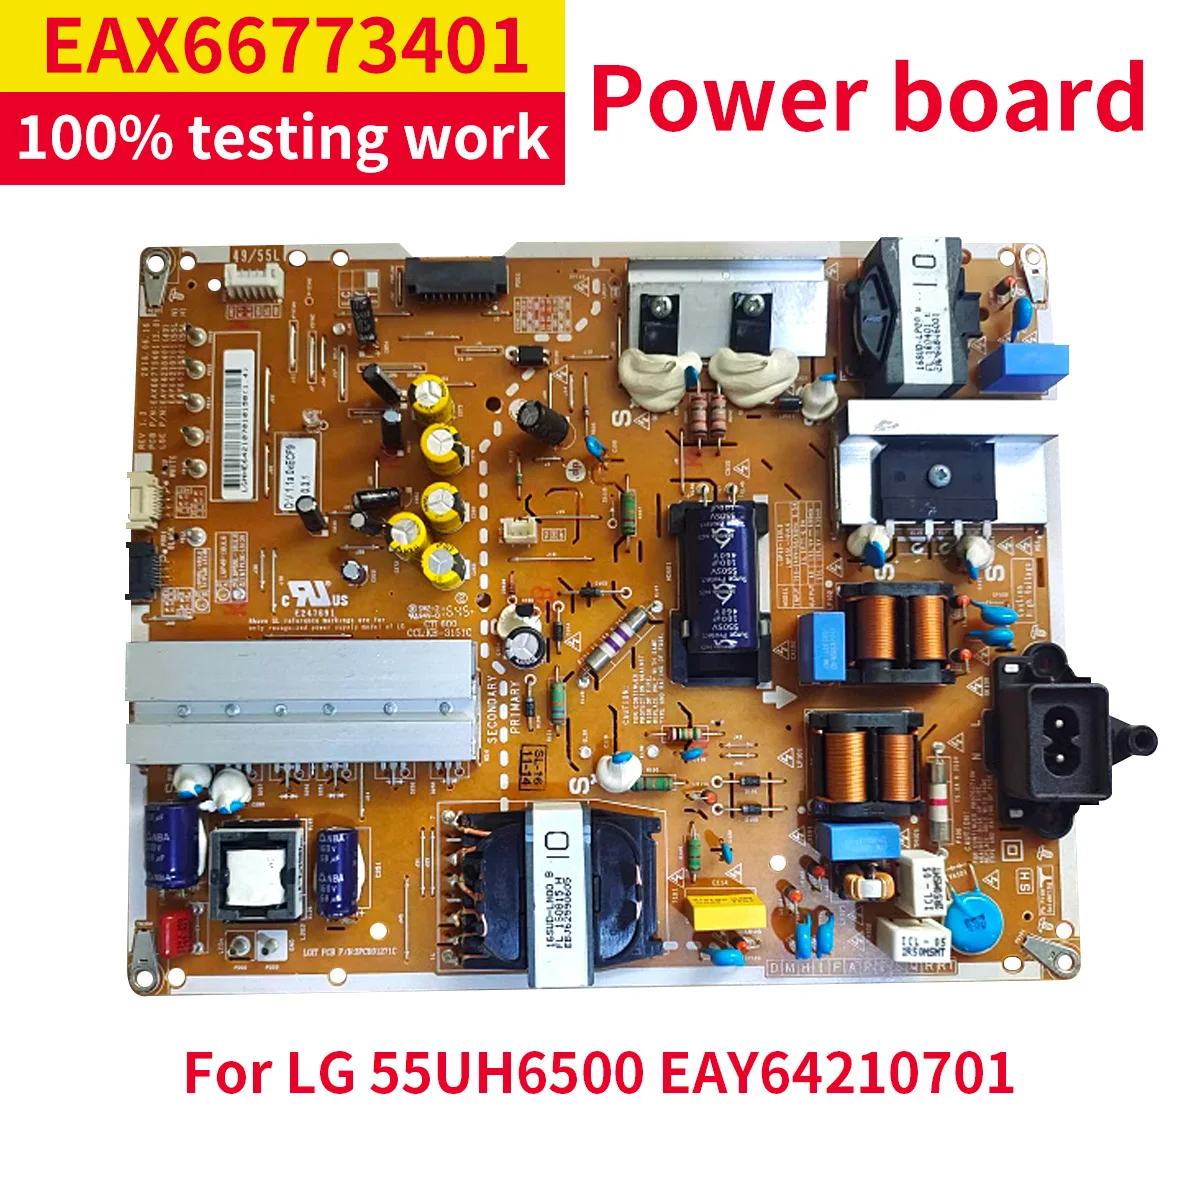 55uh6500、eax66773401、eay64210701用の高品質電源ボード